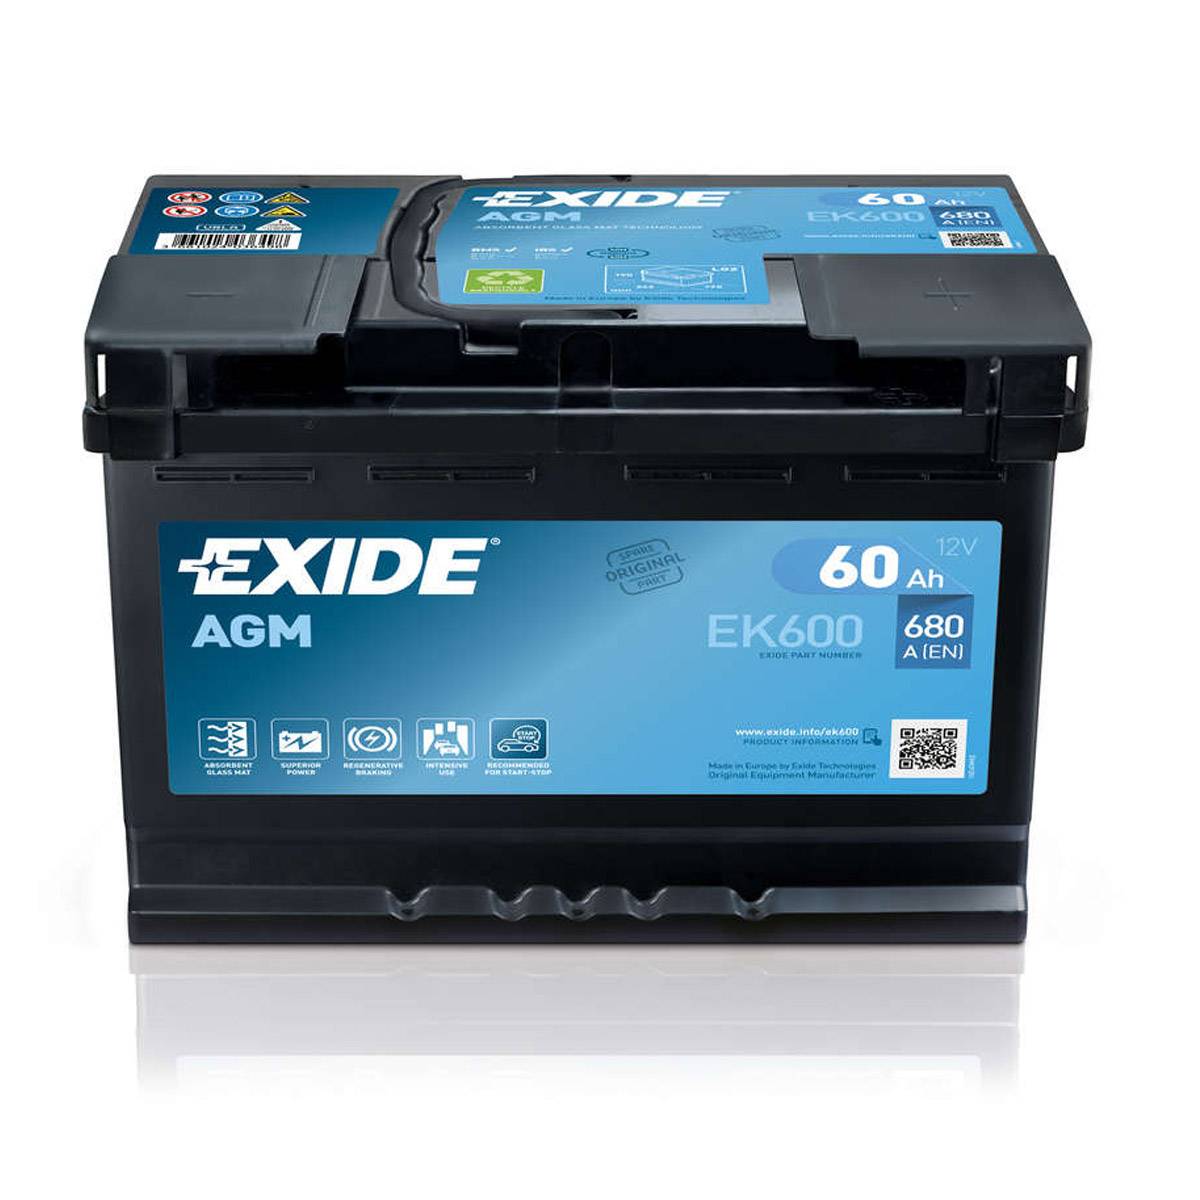 Exide EB440 Excell Starterbatterie 12V 44Ah 400A